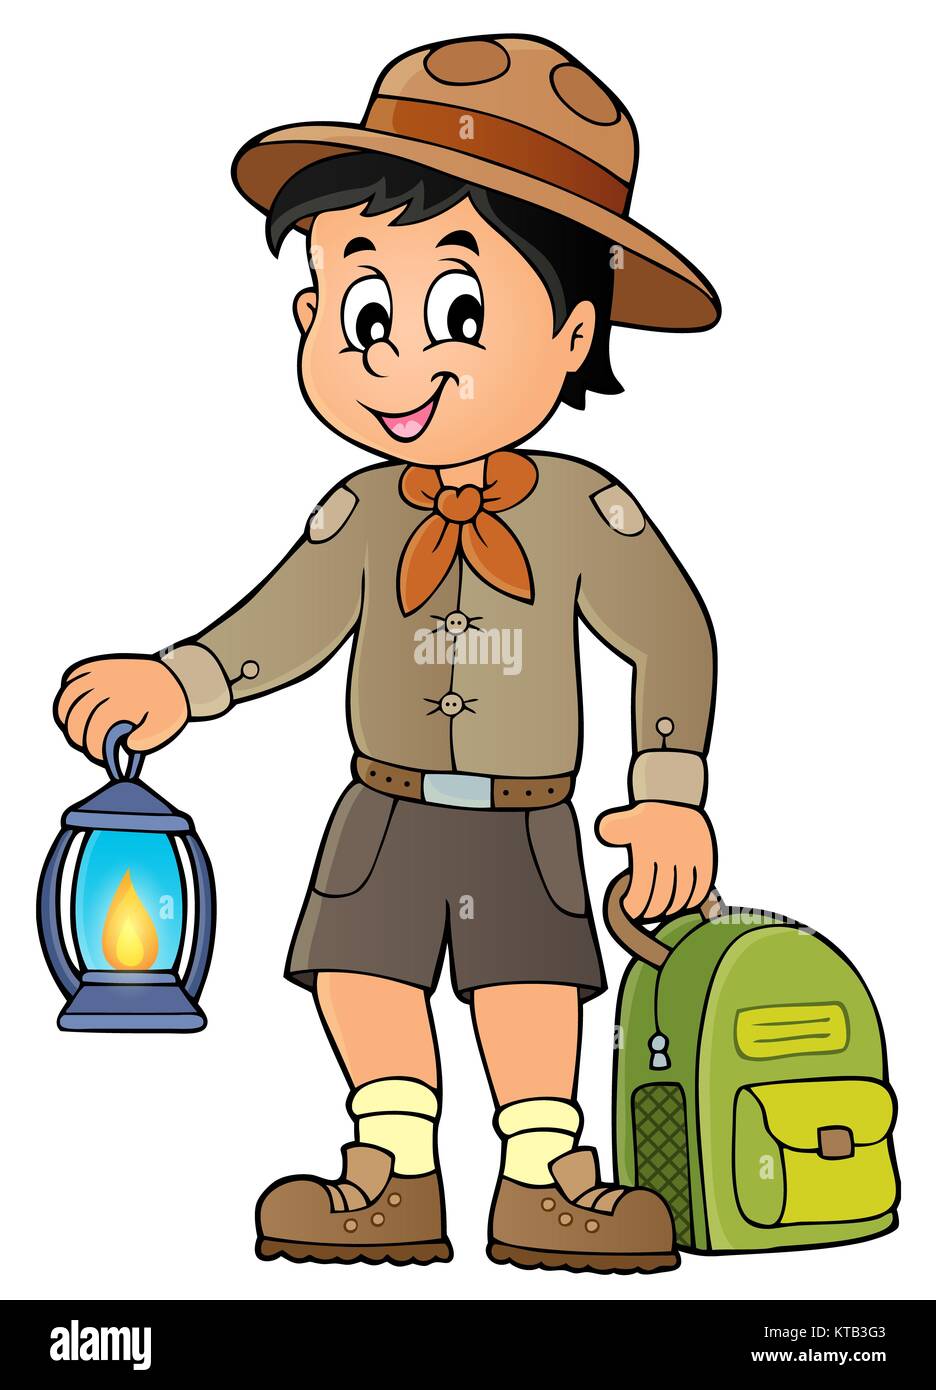 Boy Scout Tema immagine 3 Foto stock - Alamy